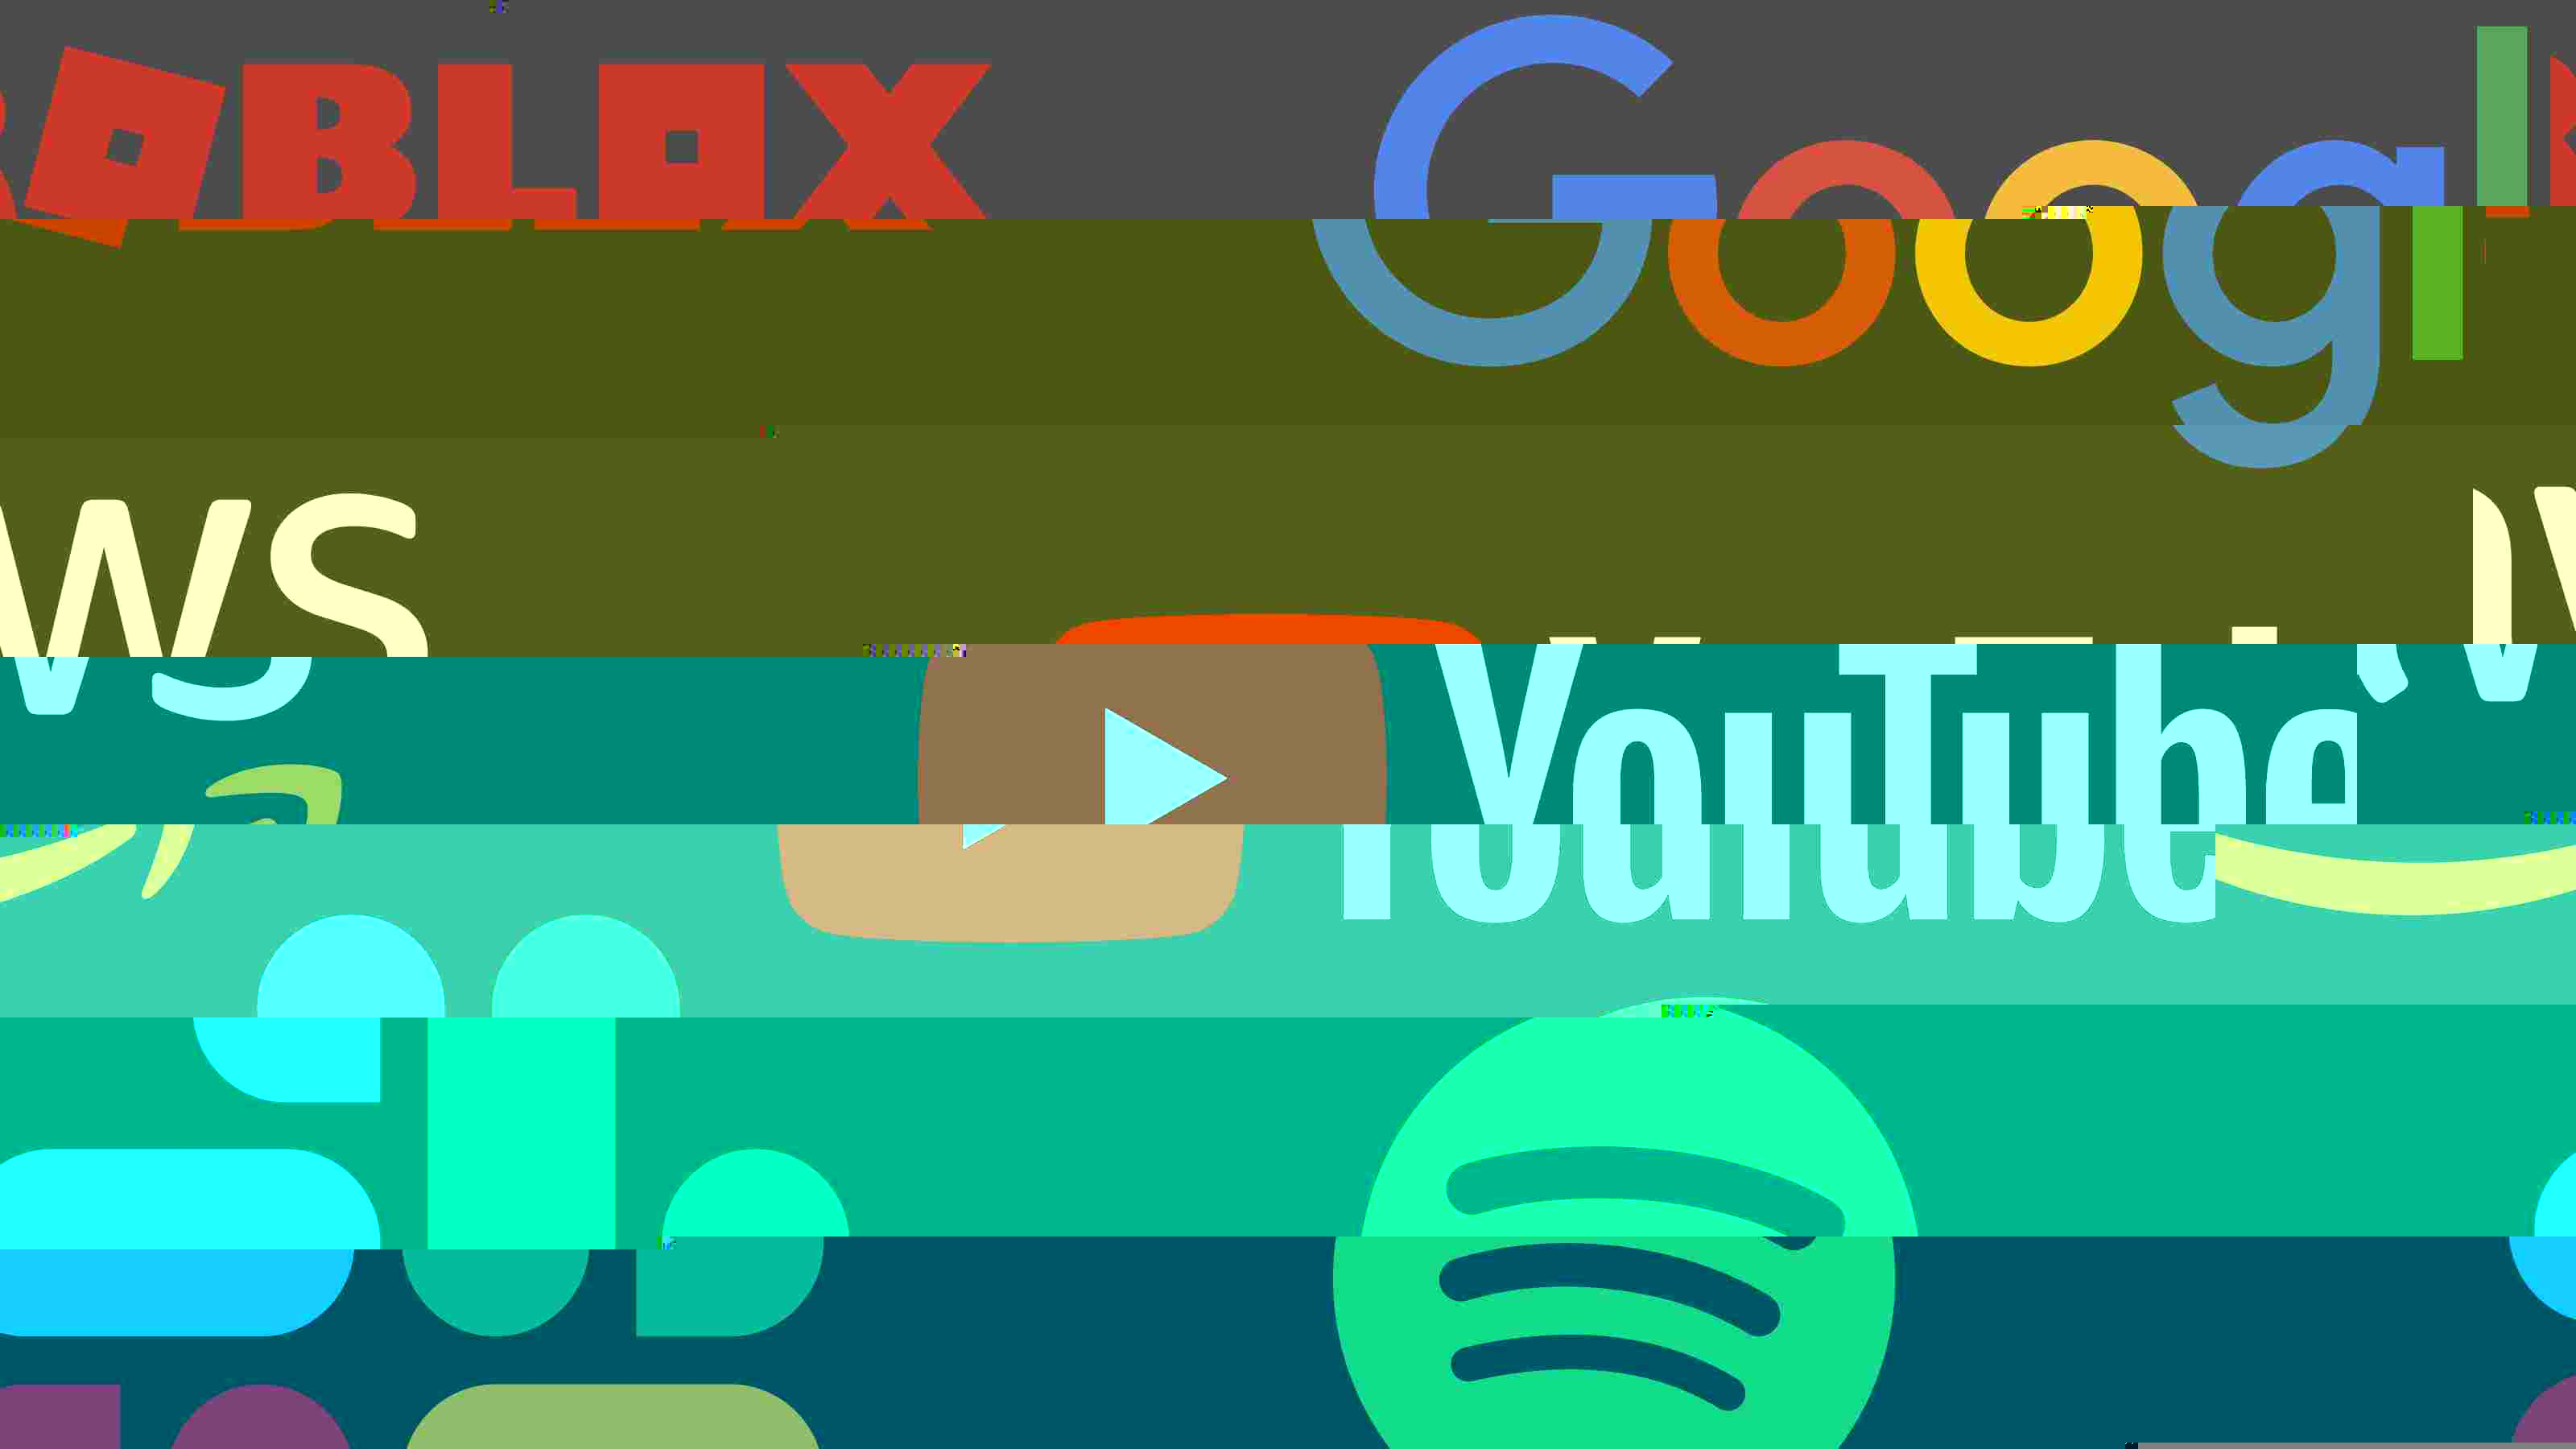 distorted logos including Roblox, Google, AWS, YouTube, Slack, Spotify